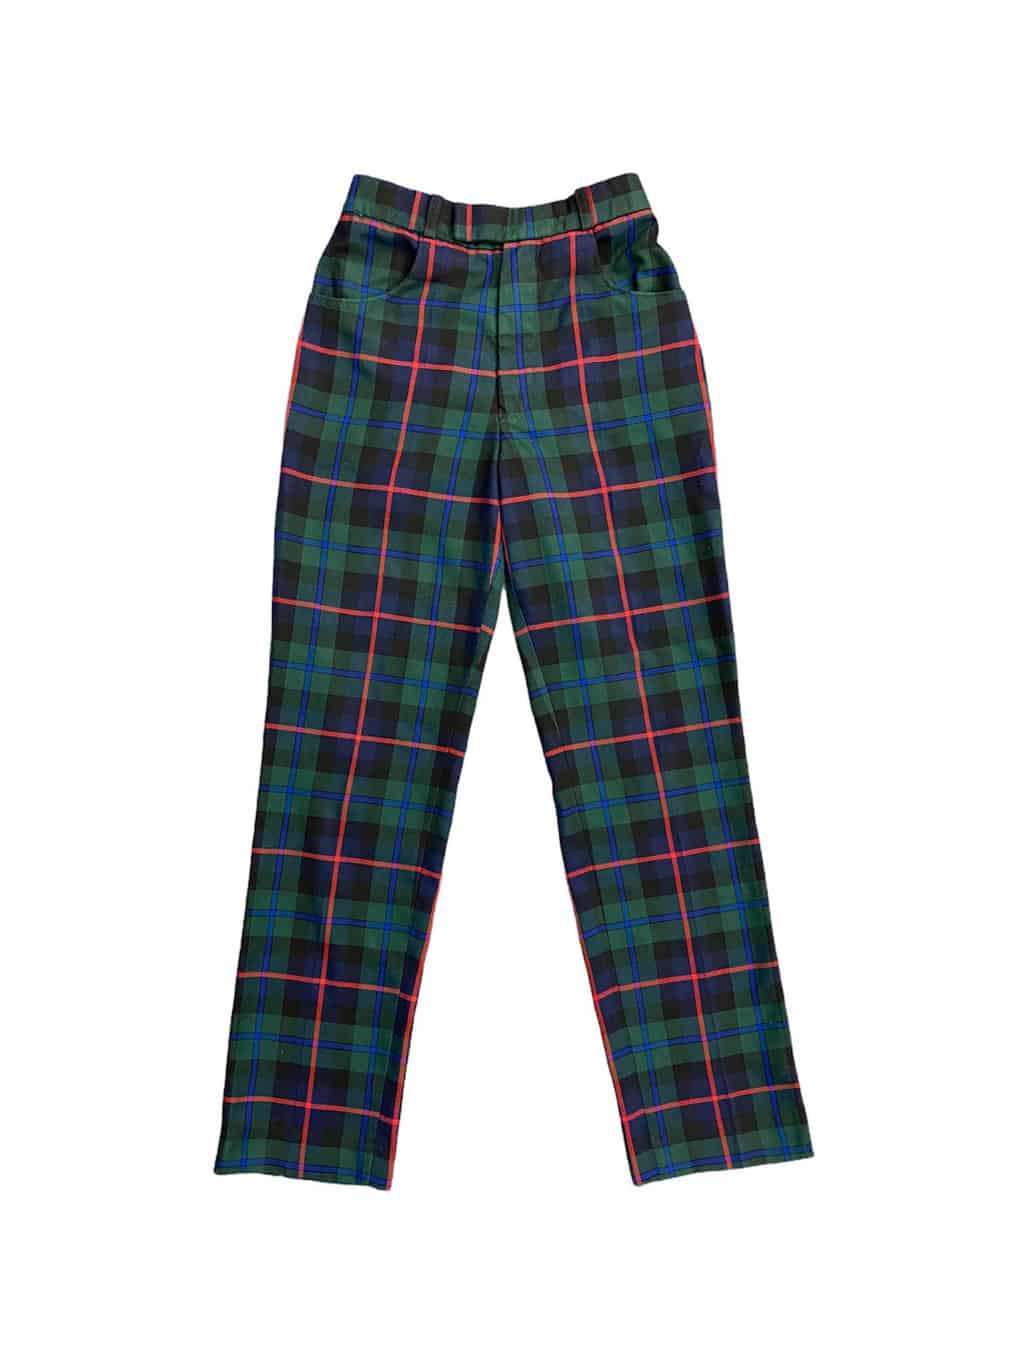 Vintage plaid tartan trousers in green navy & red - W26 x L30.5 - St ...